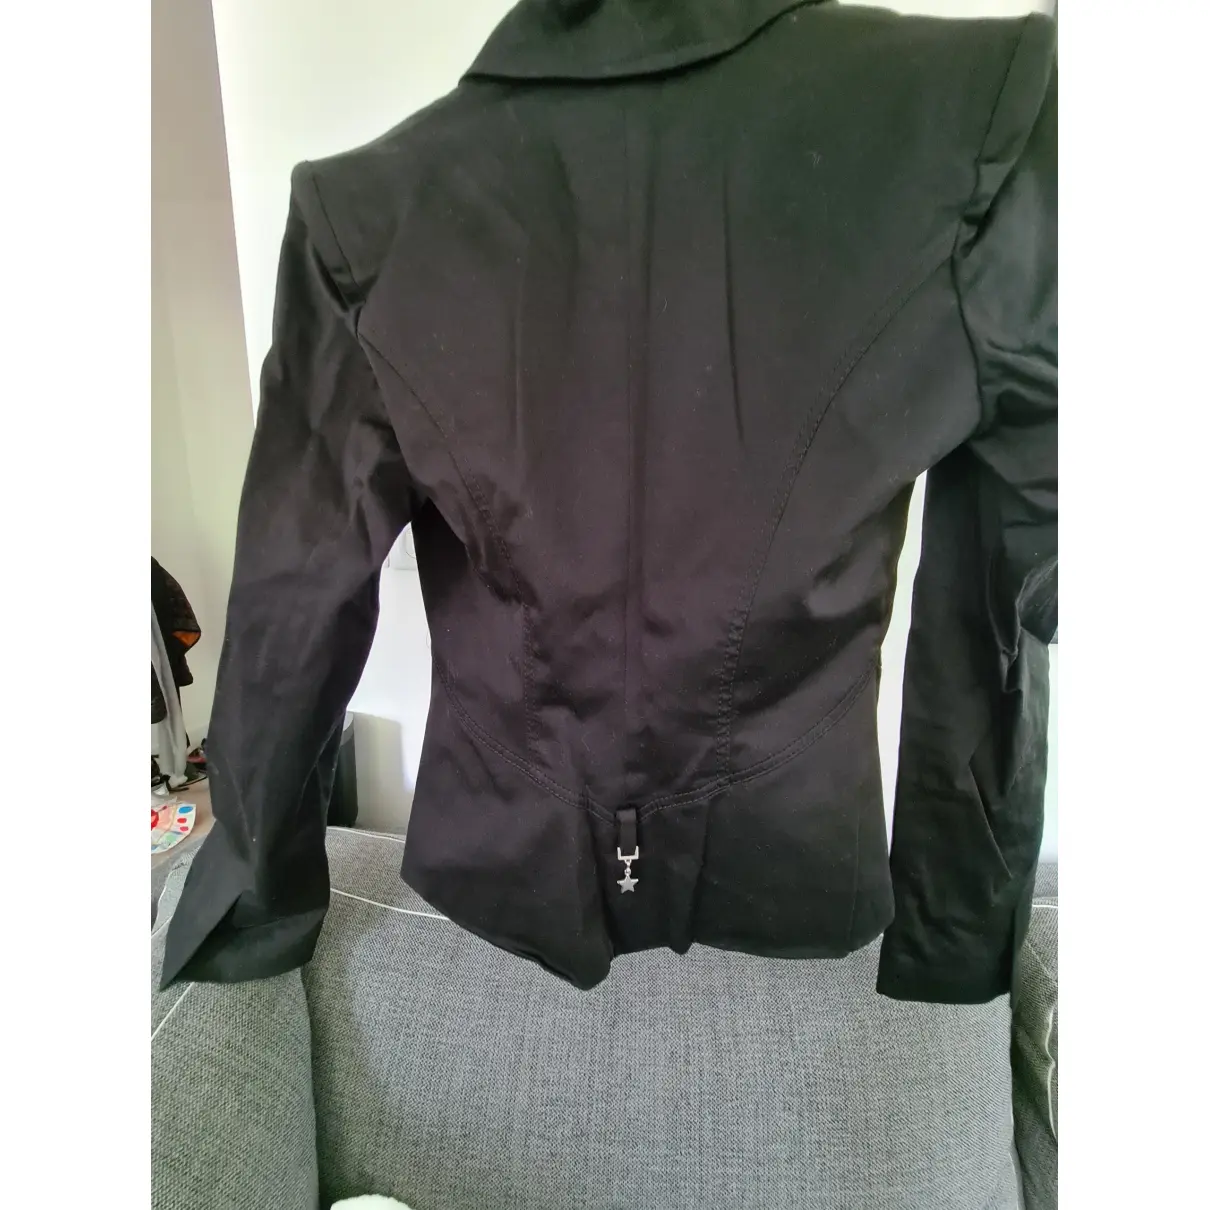 Buy Thierry Mugler Suit jacket online